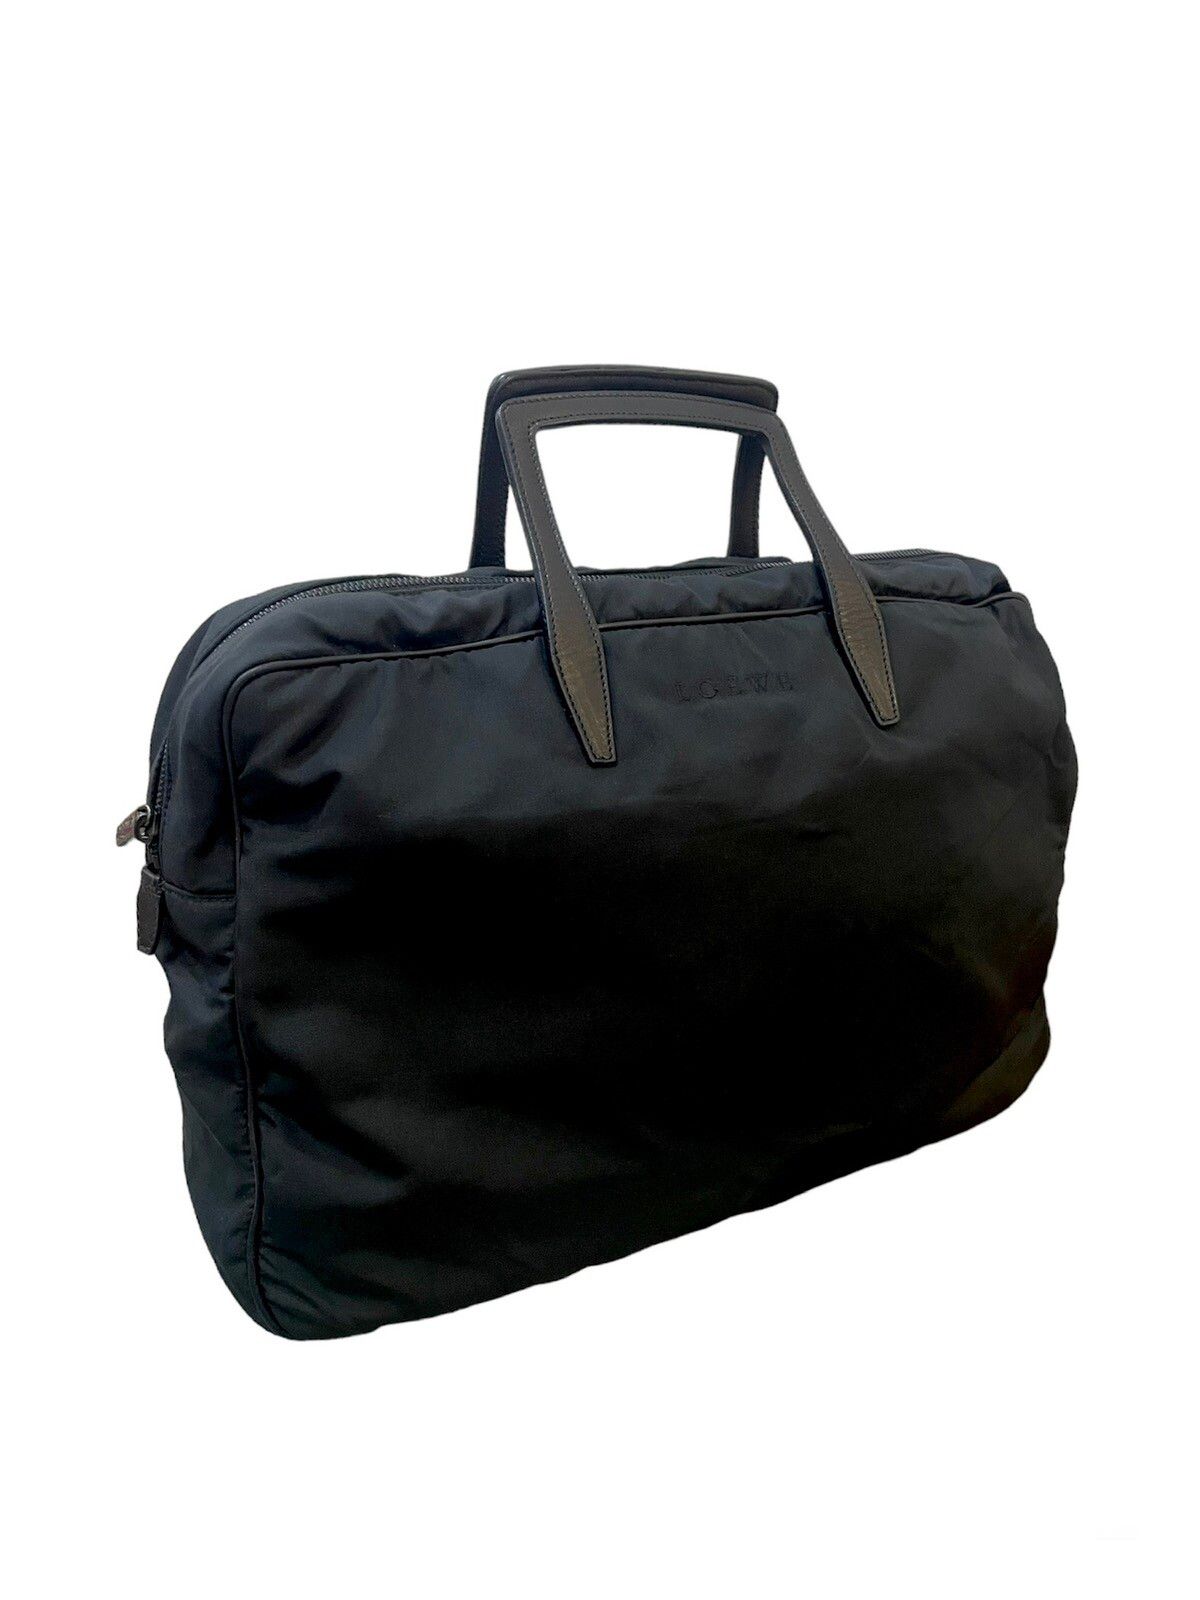 Loewe Black Nylon Leather Handle Travel Bag - 1